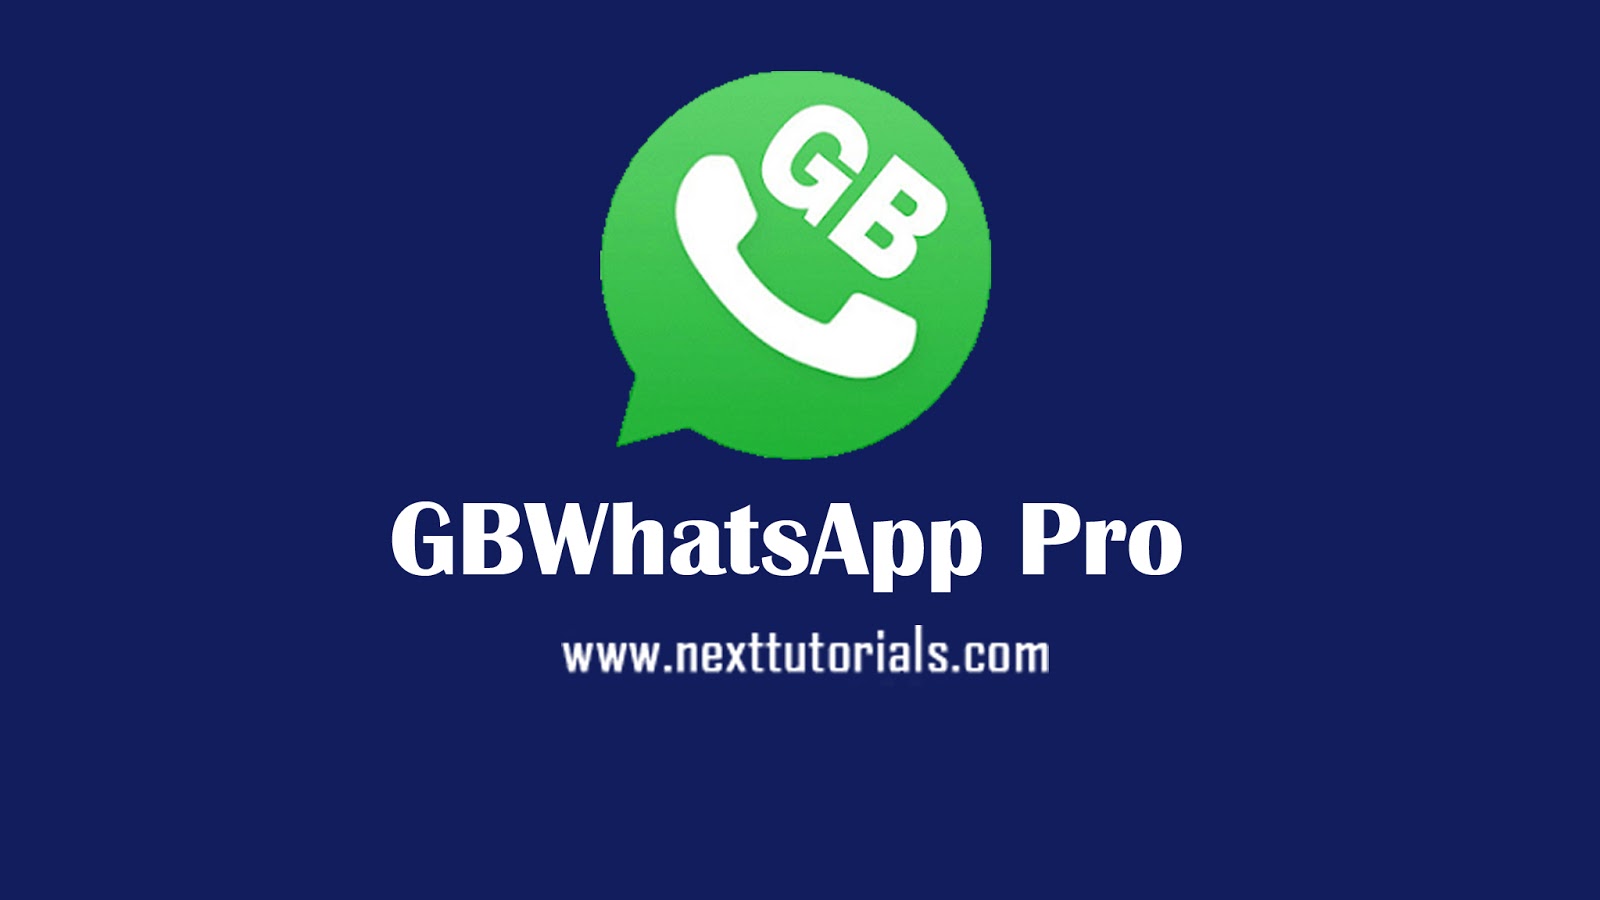 Gbwhatsapp Pro V8 25 Gbwhatsapp Pro V8 25 Apk Latest Version Download